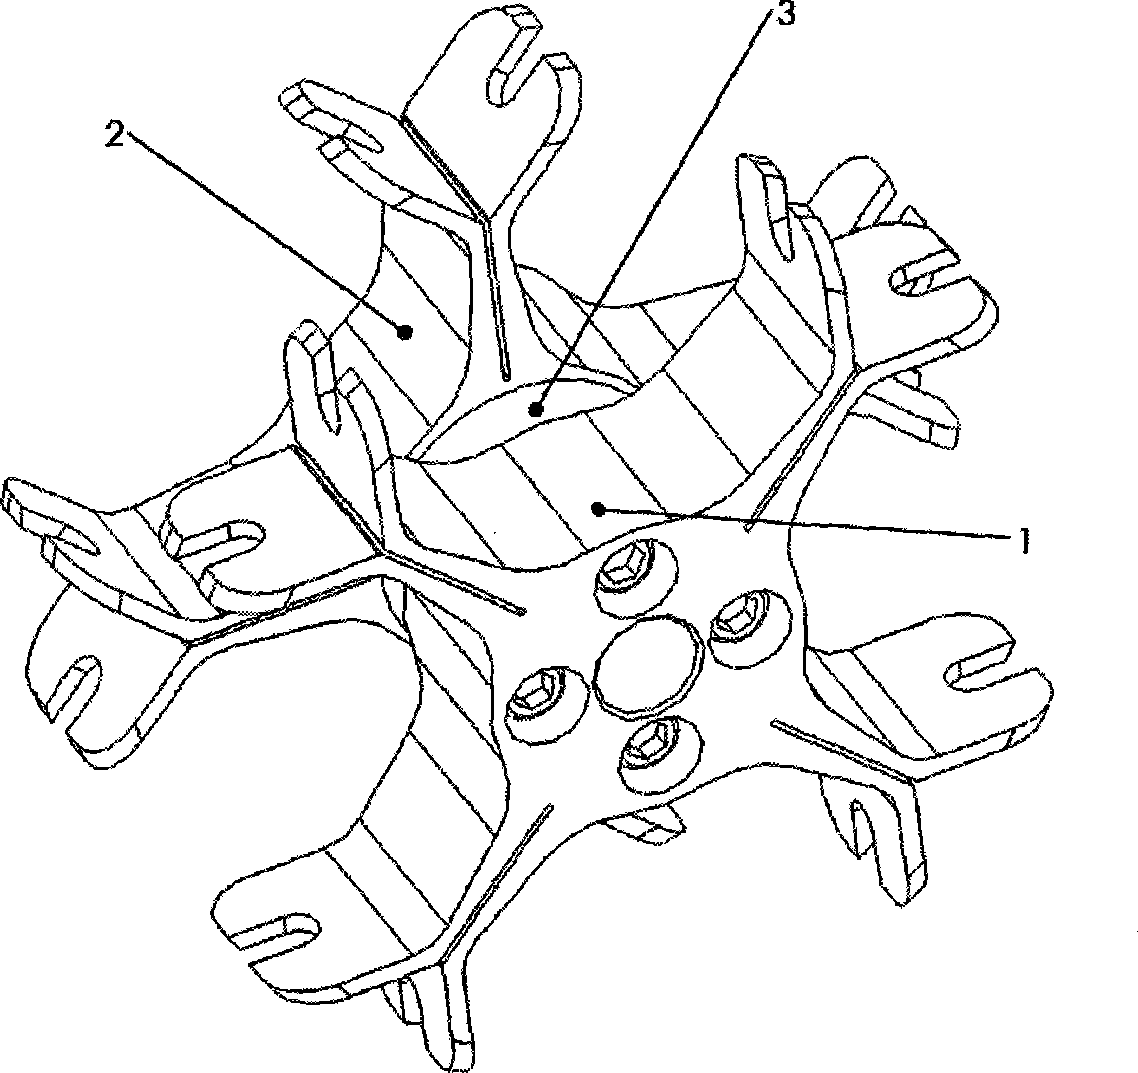 Omnidirectional wheel structure